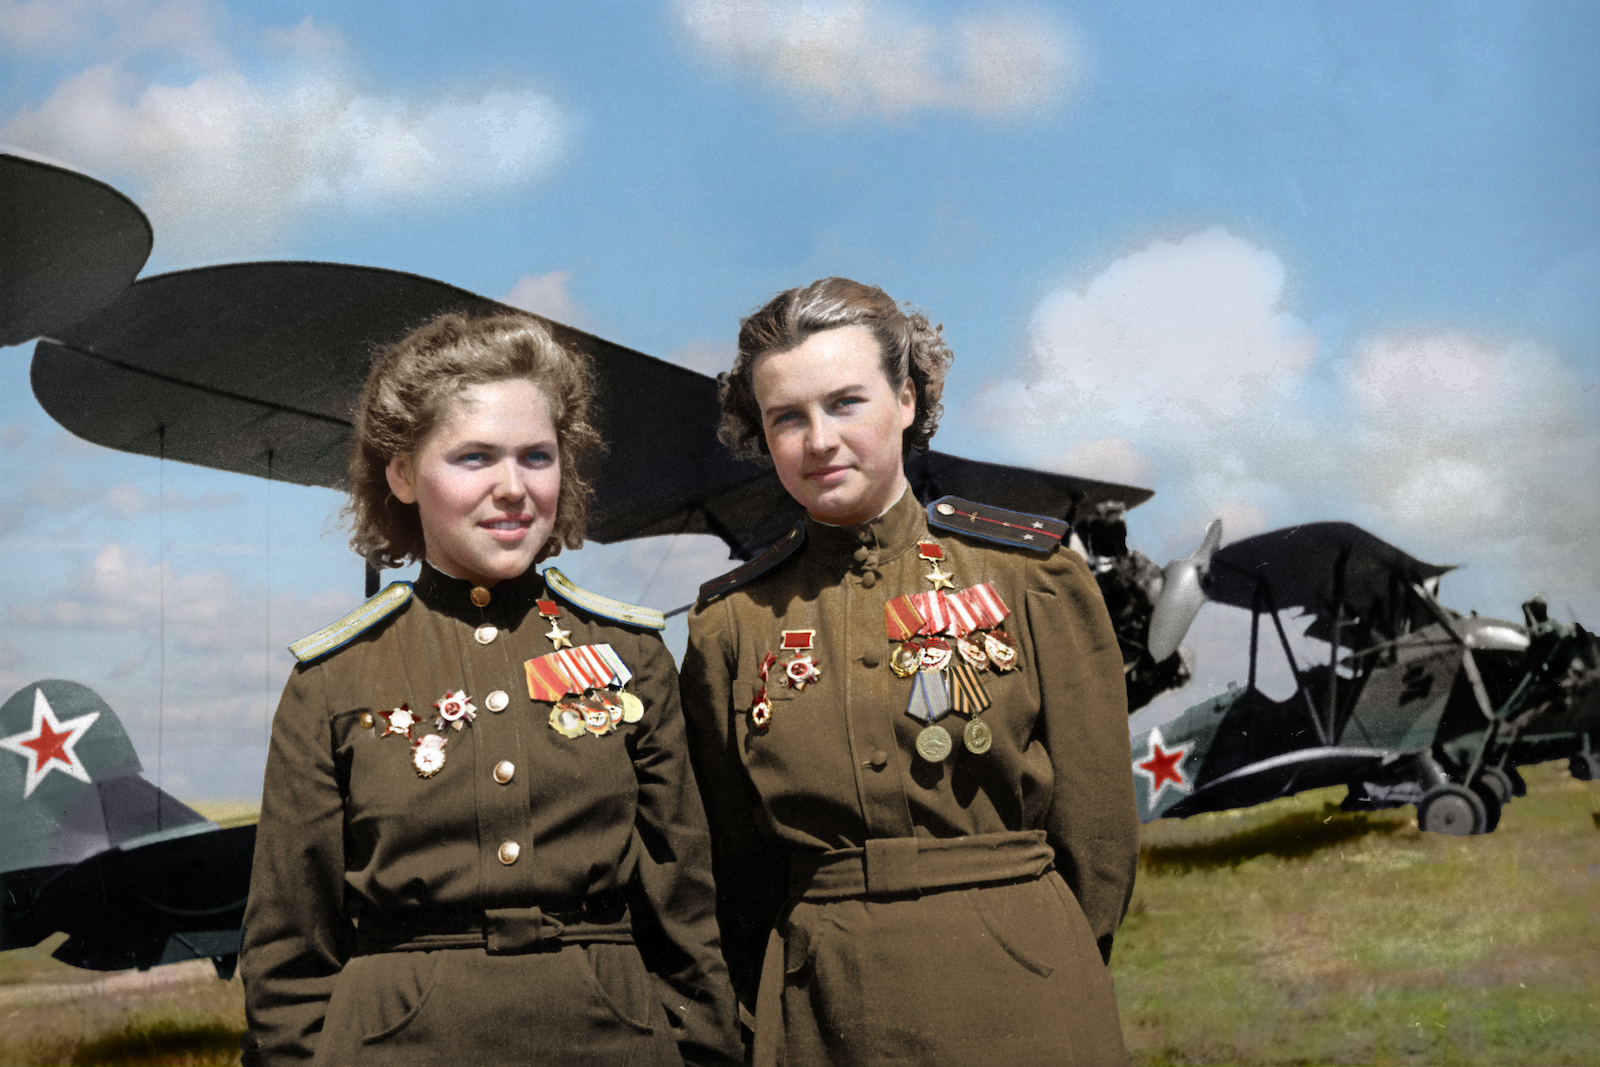 Soviet Air Force officers Rufina Gasheva and Nataly Meklin